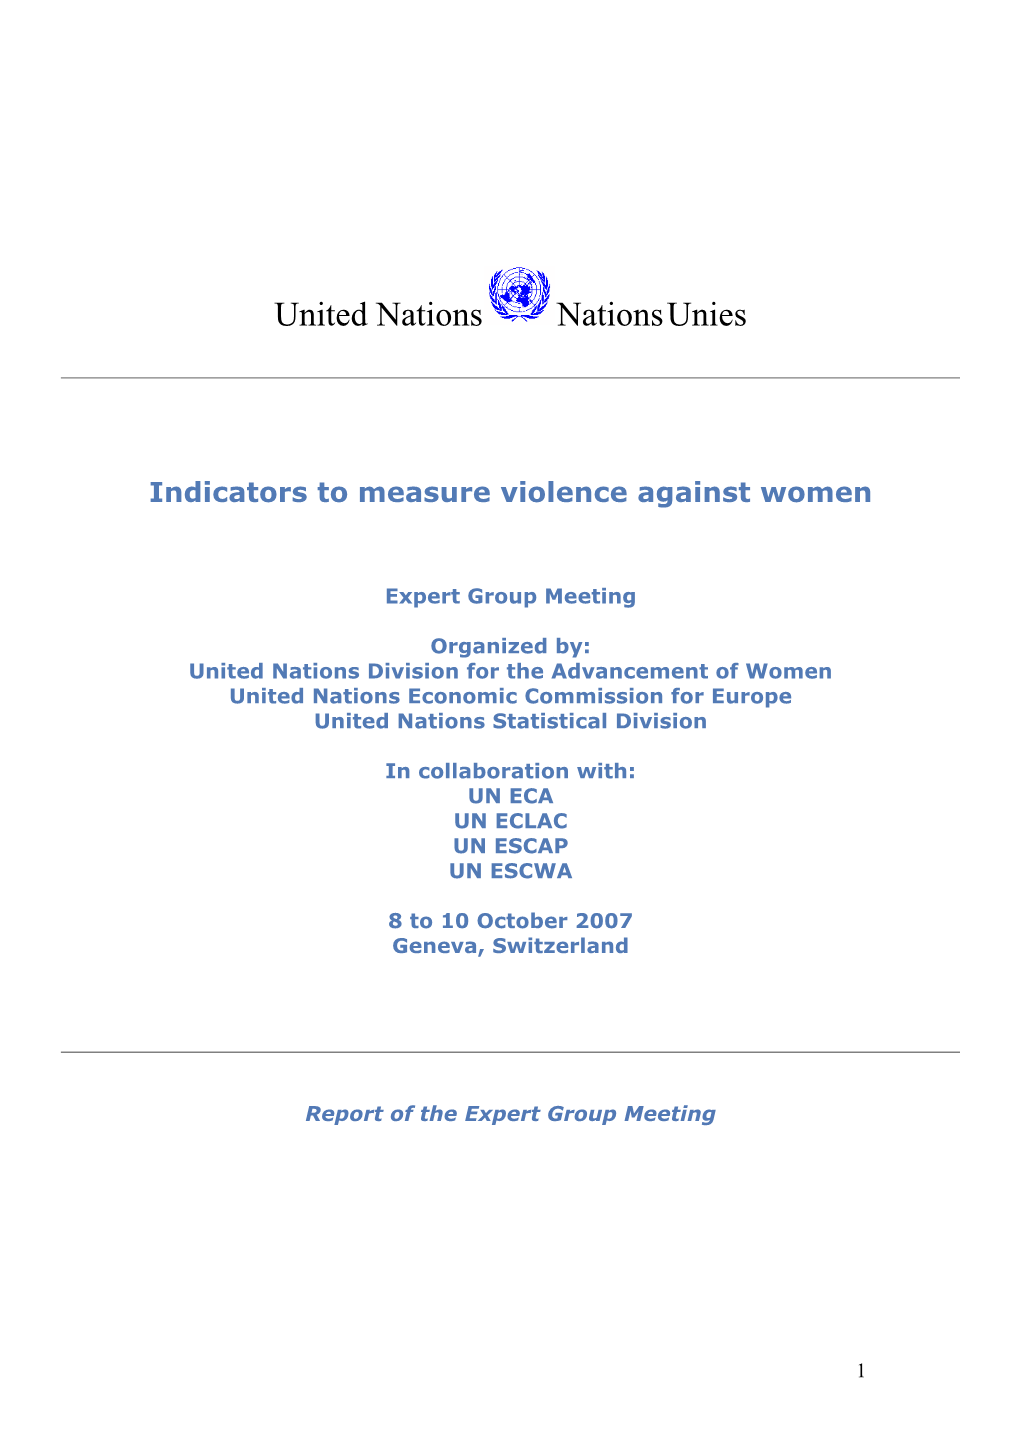 Indicators to Measure Violence Against Women